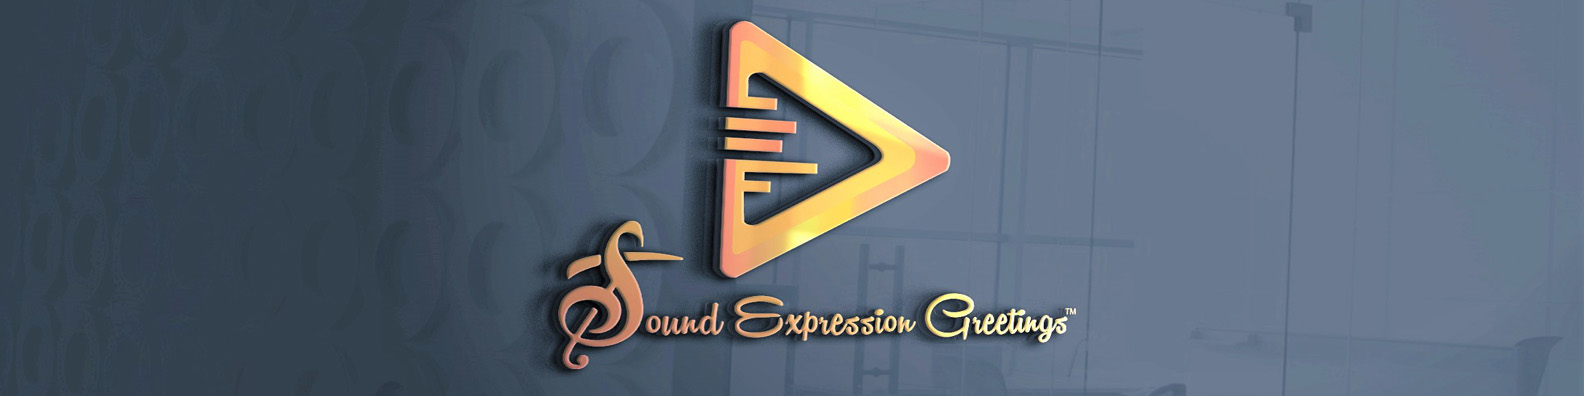 Sound expression greetings greylogo.png